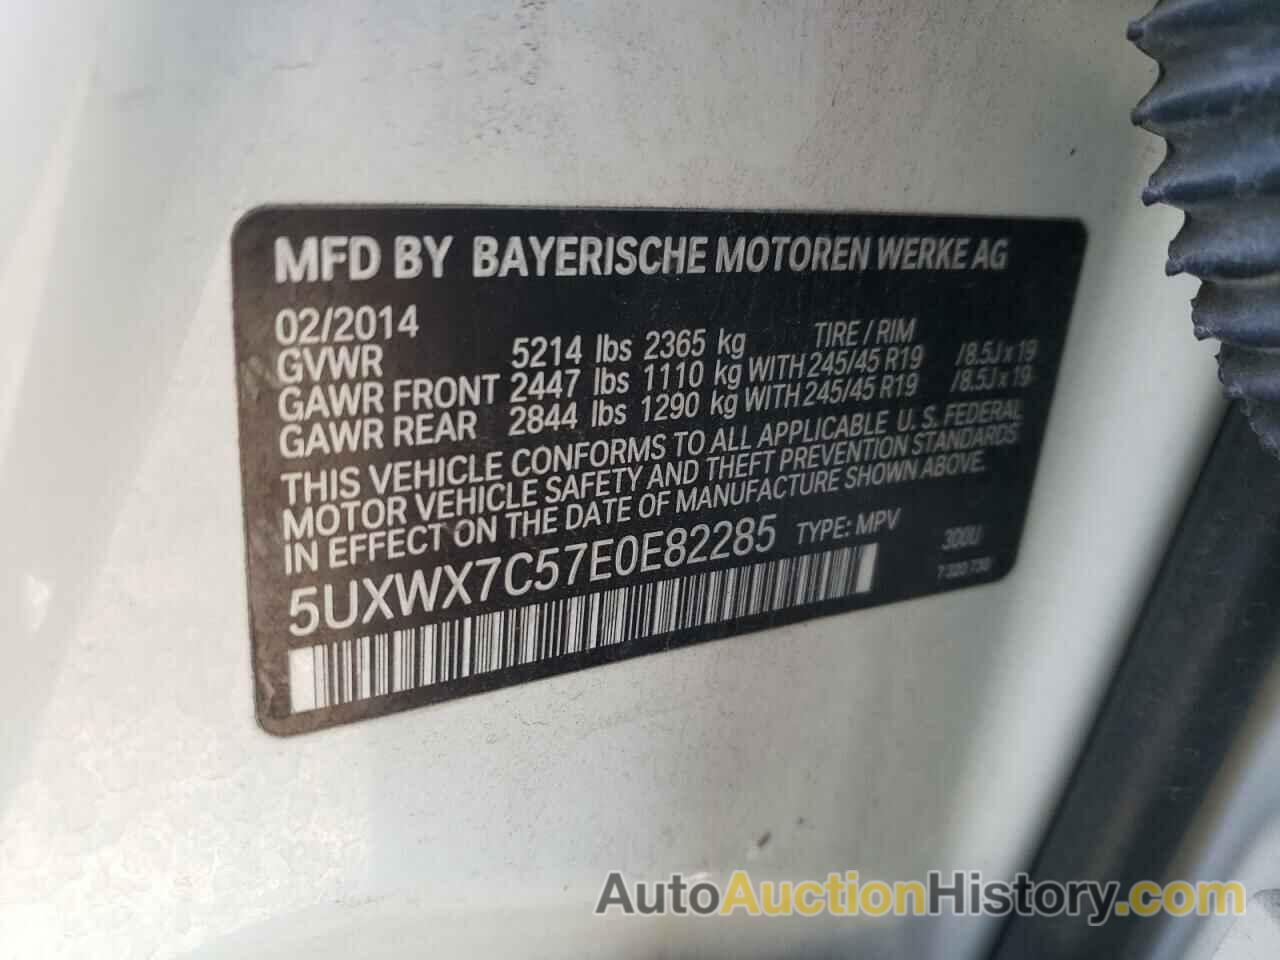 BMW X3 XDRIVE35I, 5UXWX7C57E0E82285